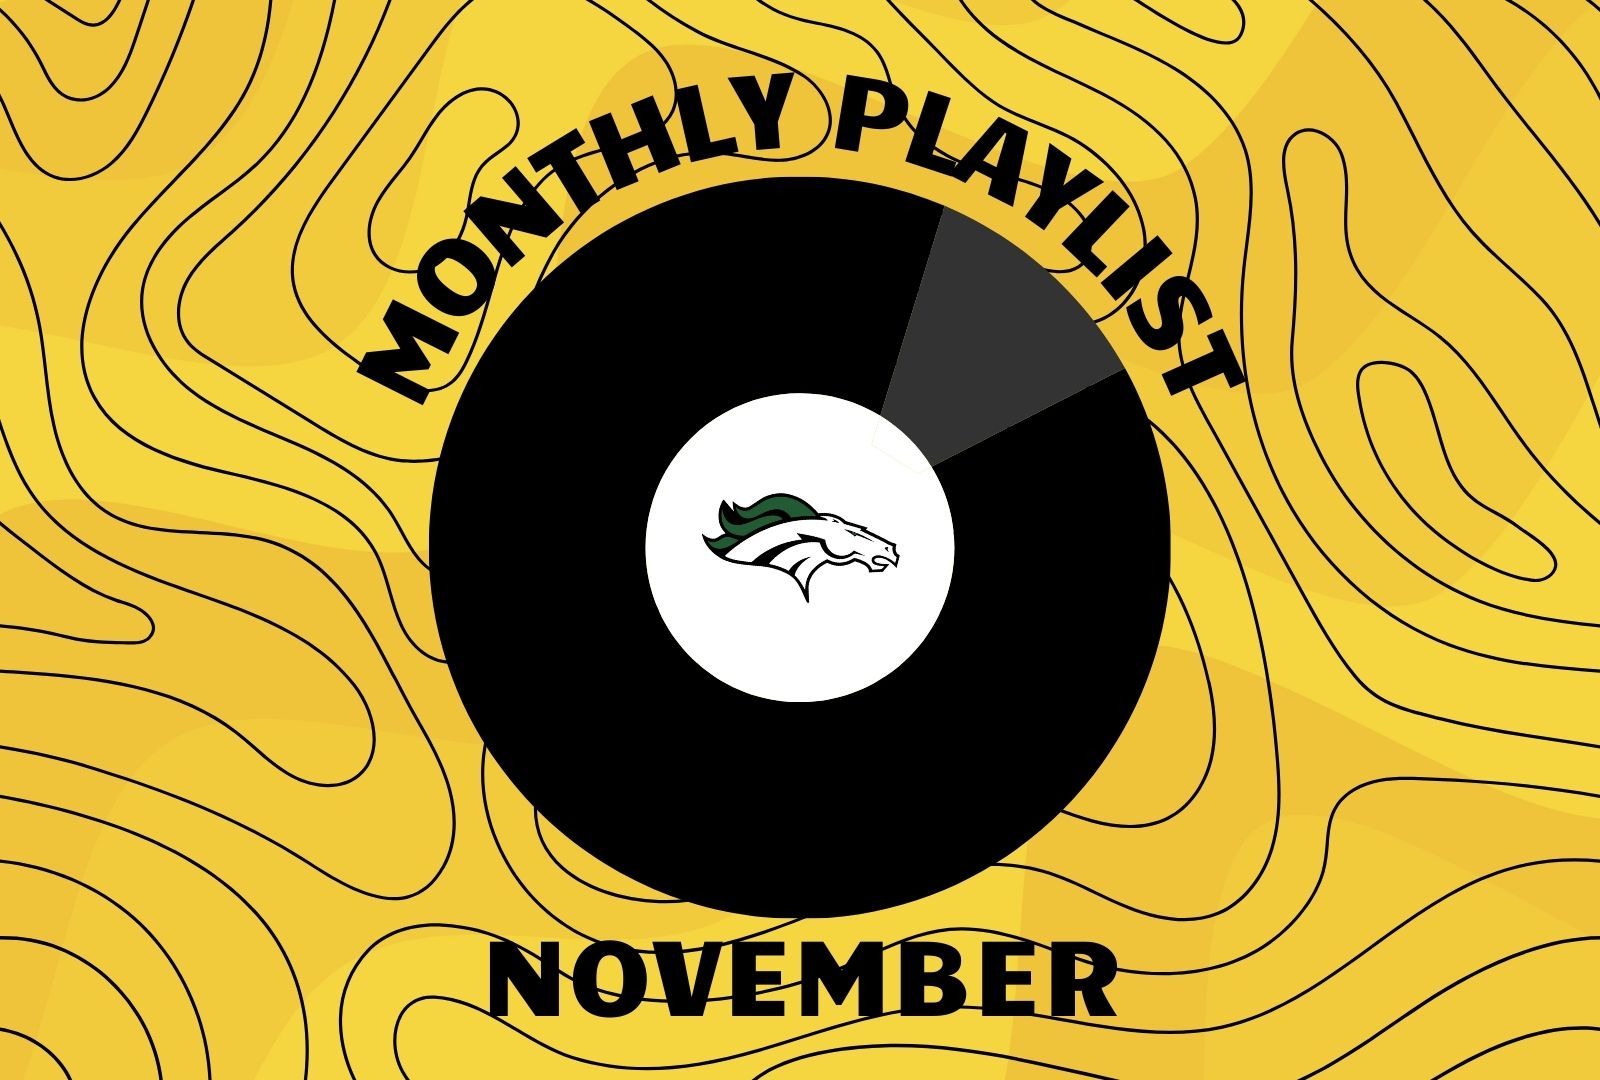 November Playlist: Fall Into the Perfect Autumn Acoustics